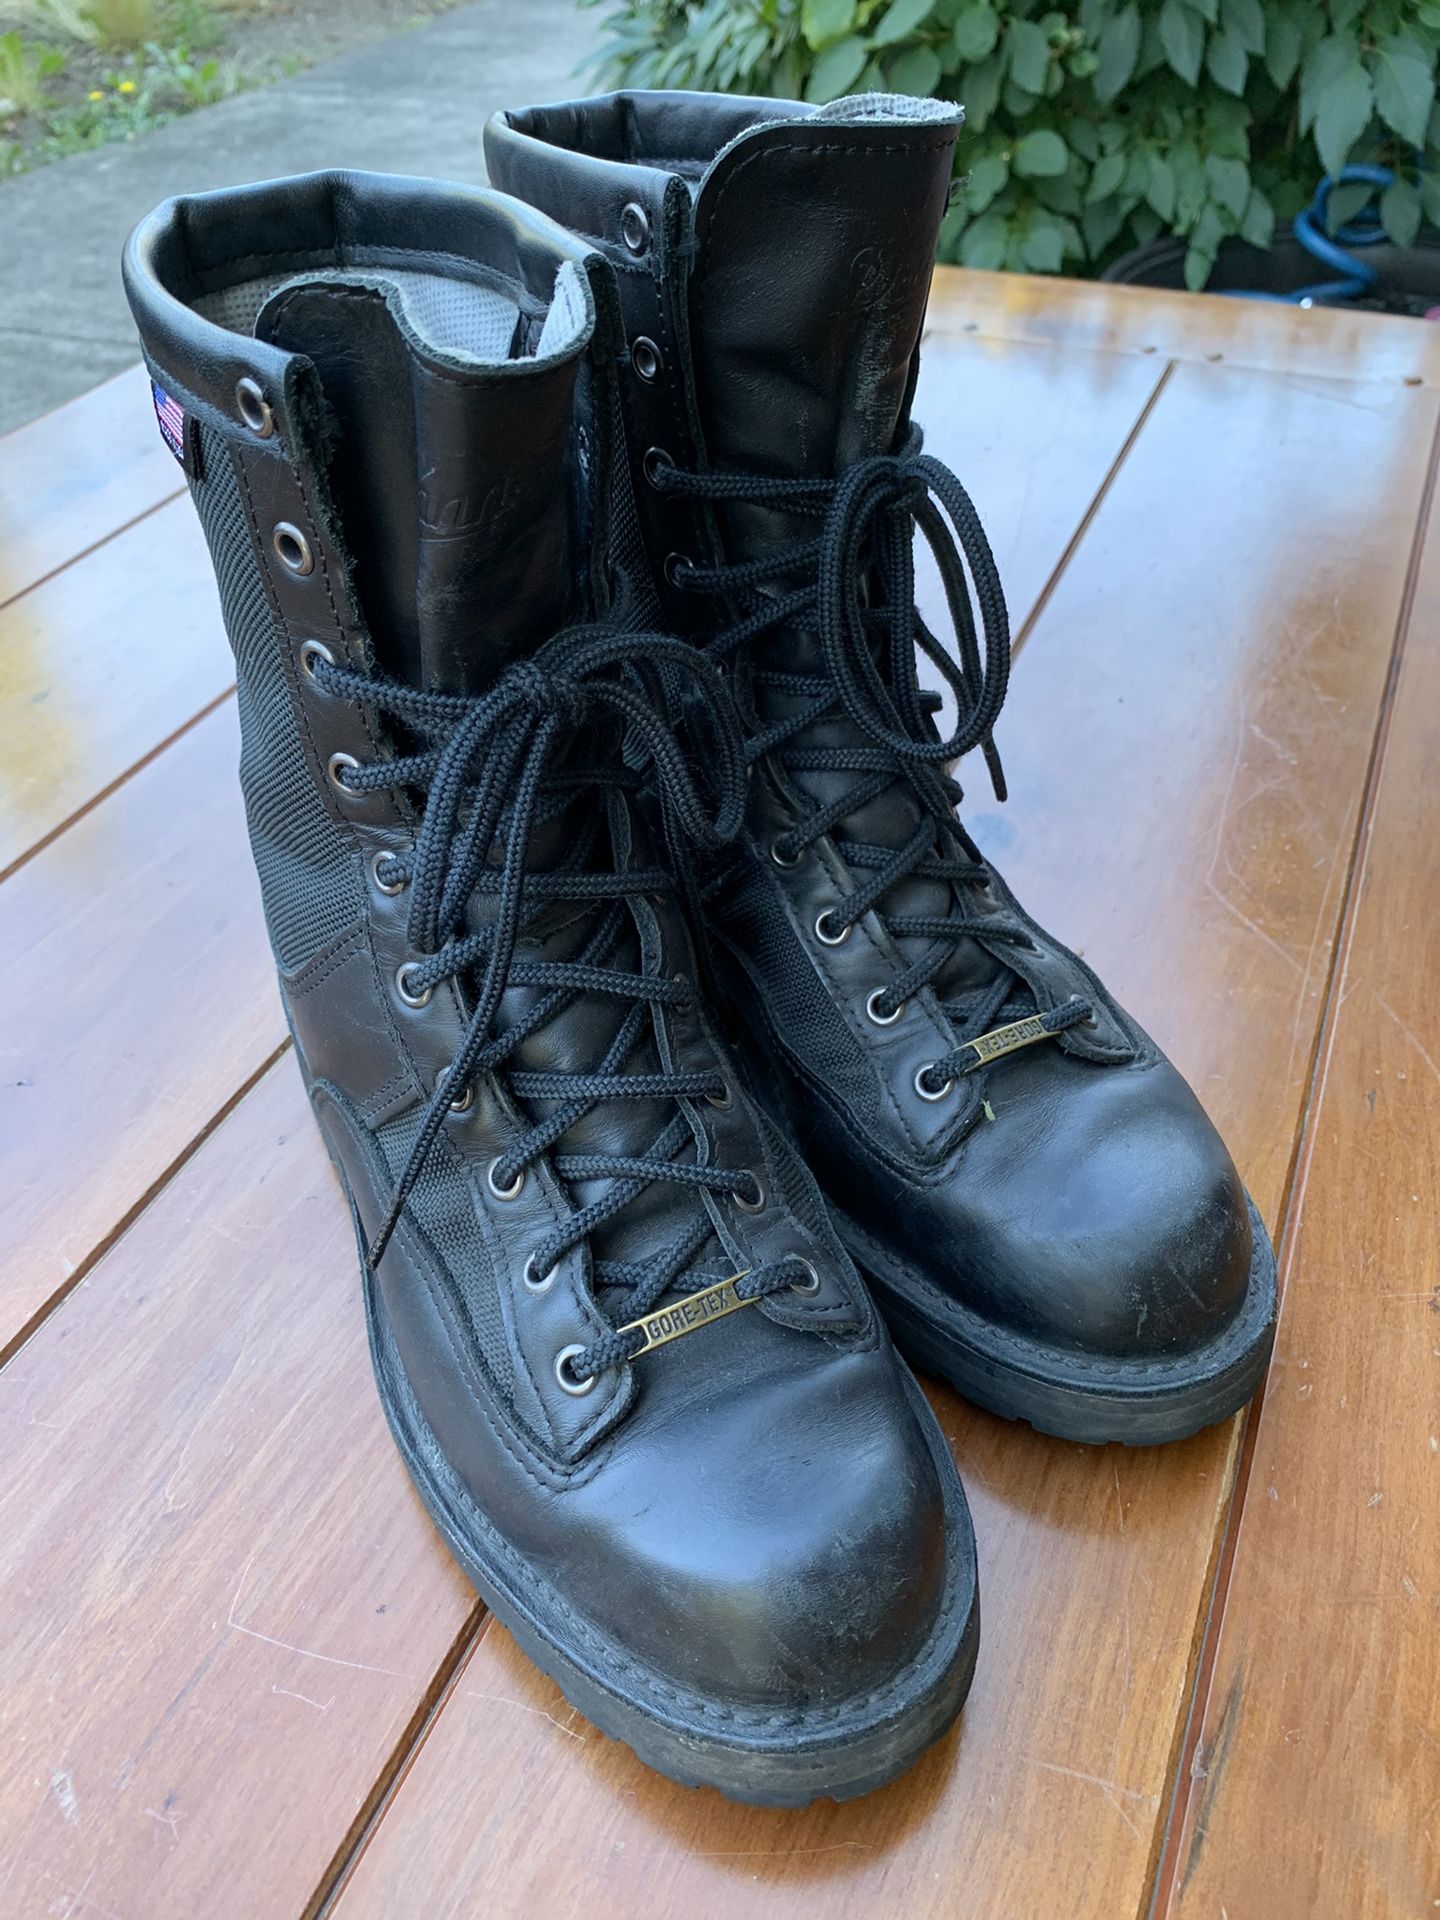 Danner Boots- Men’s size 7.5 w/Gortex